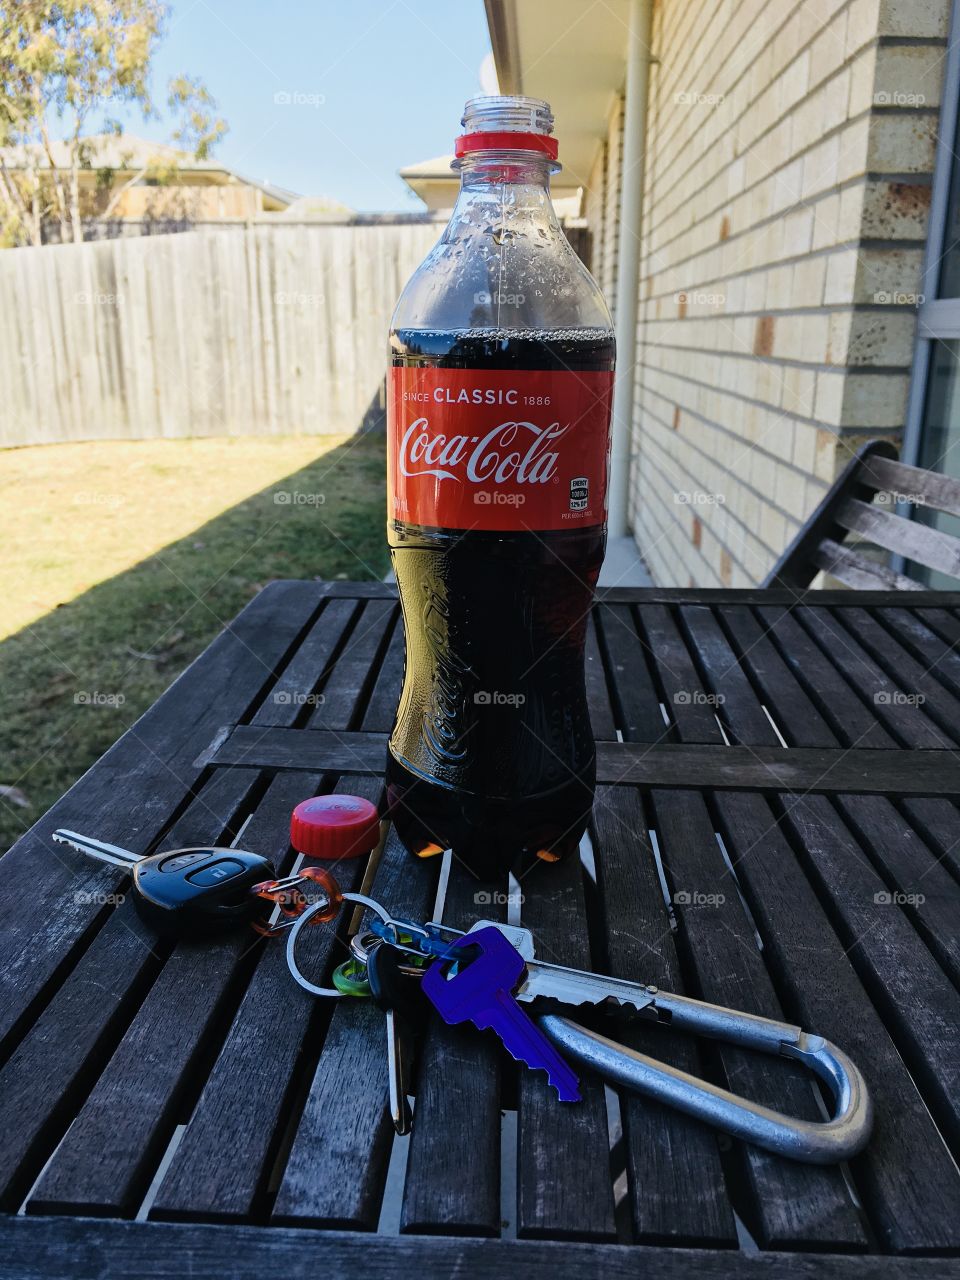 Cola-Cola best drink